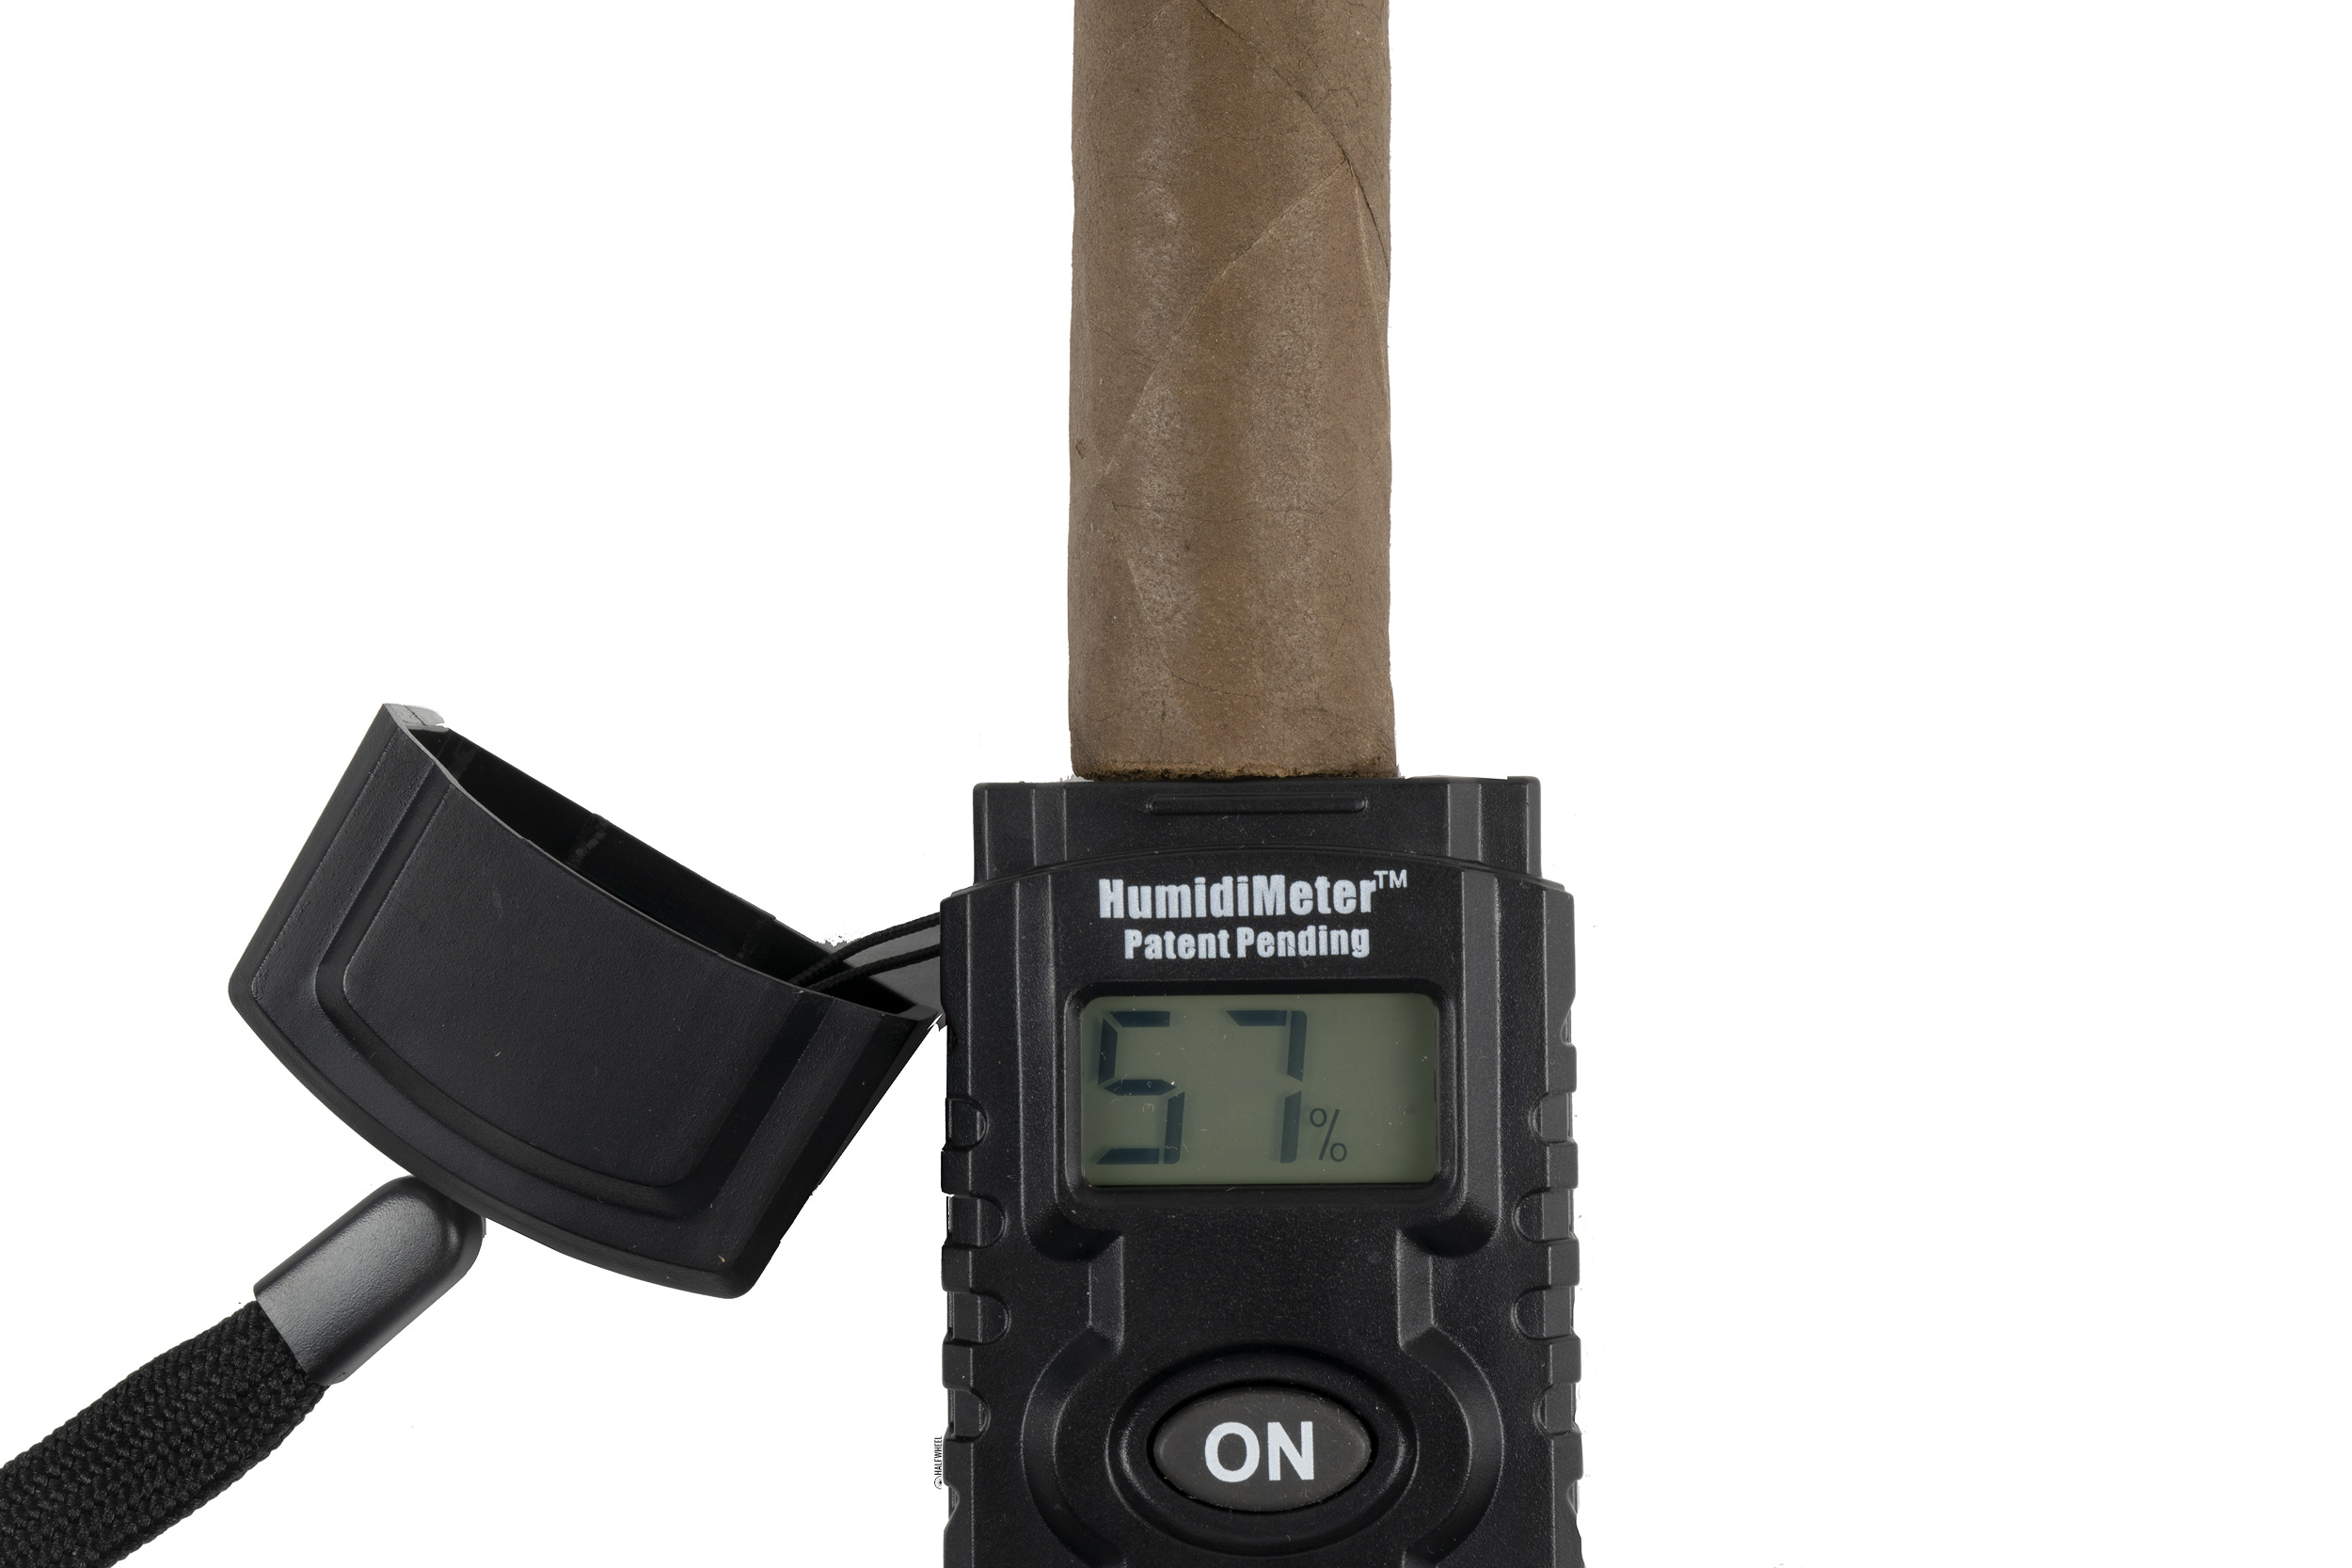 CigarMedics HumidiMeter